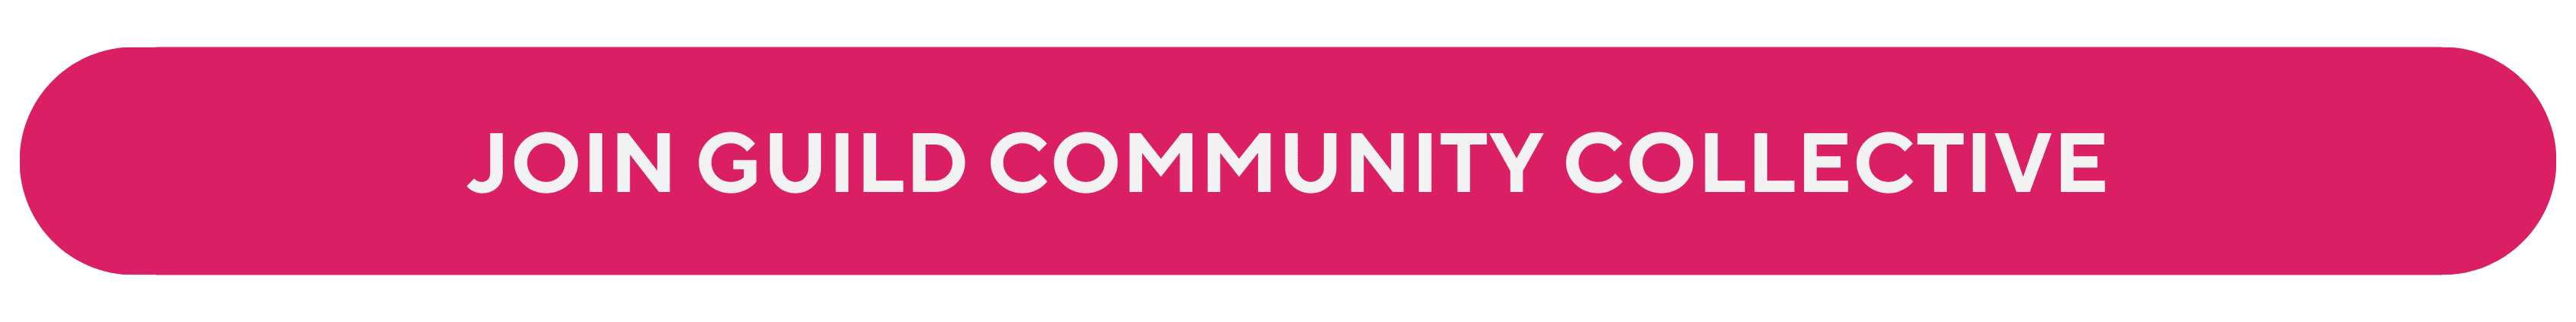 Community Conversation - engagement in an alumni community